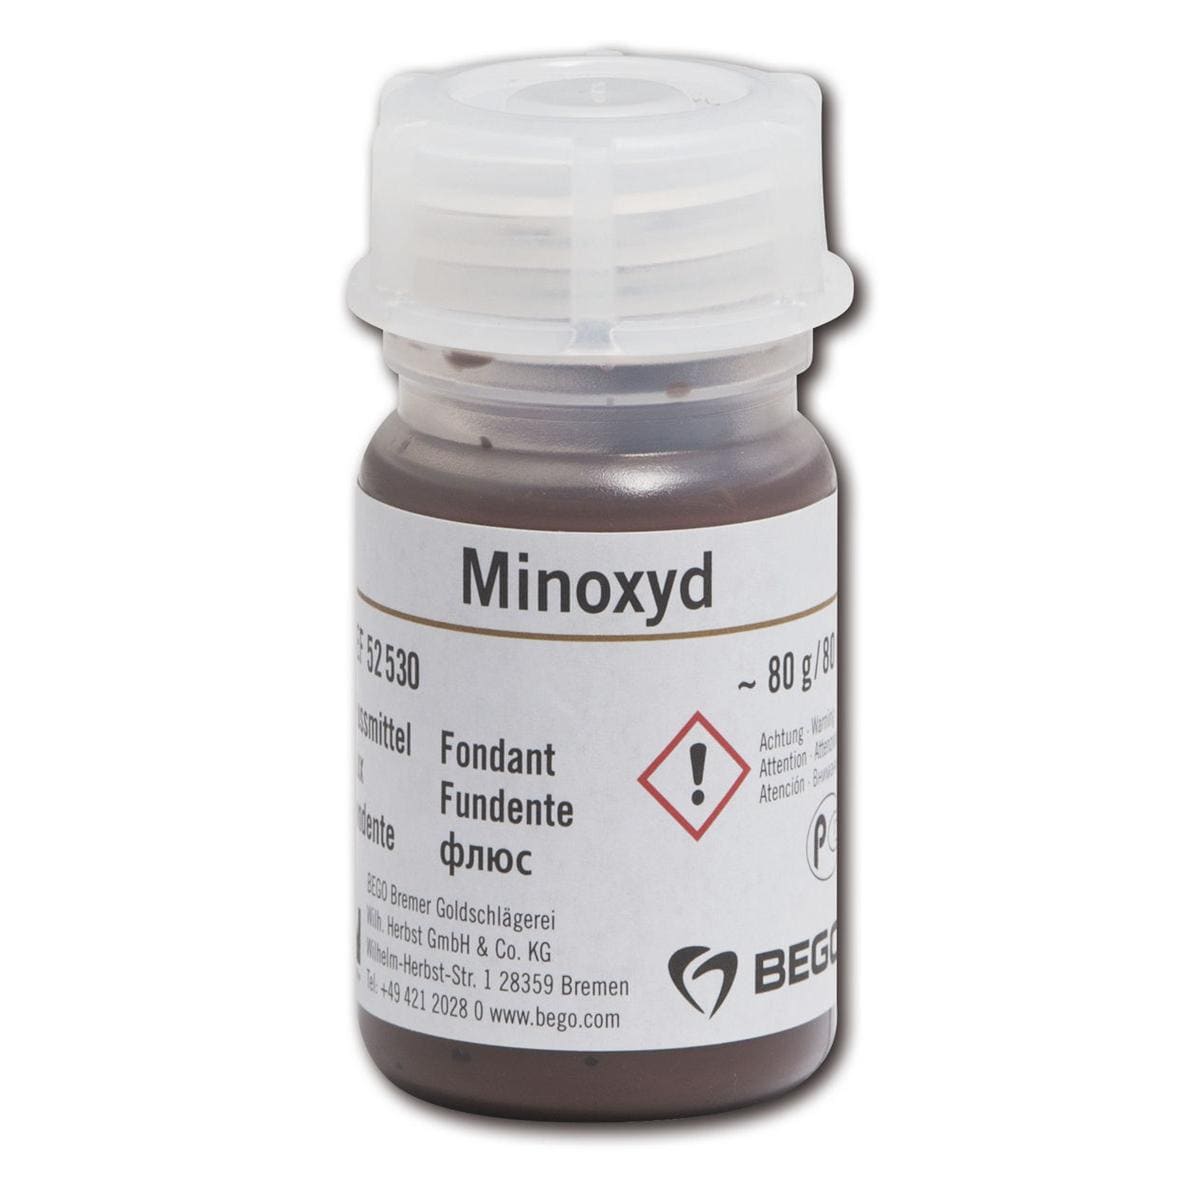 Minoxyd - Packung 80 g